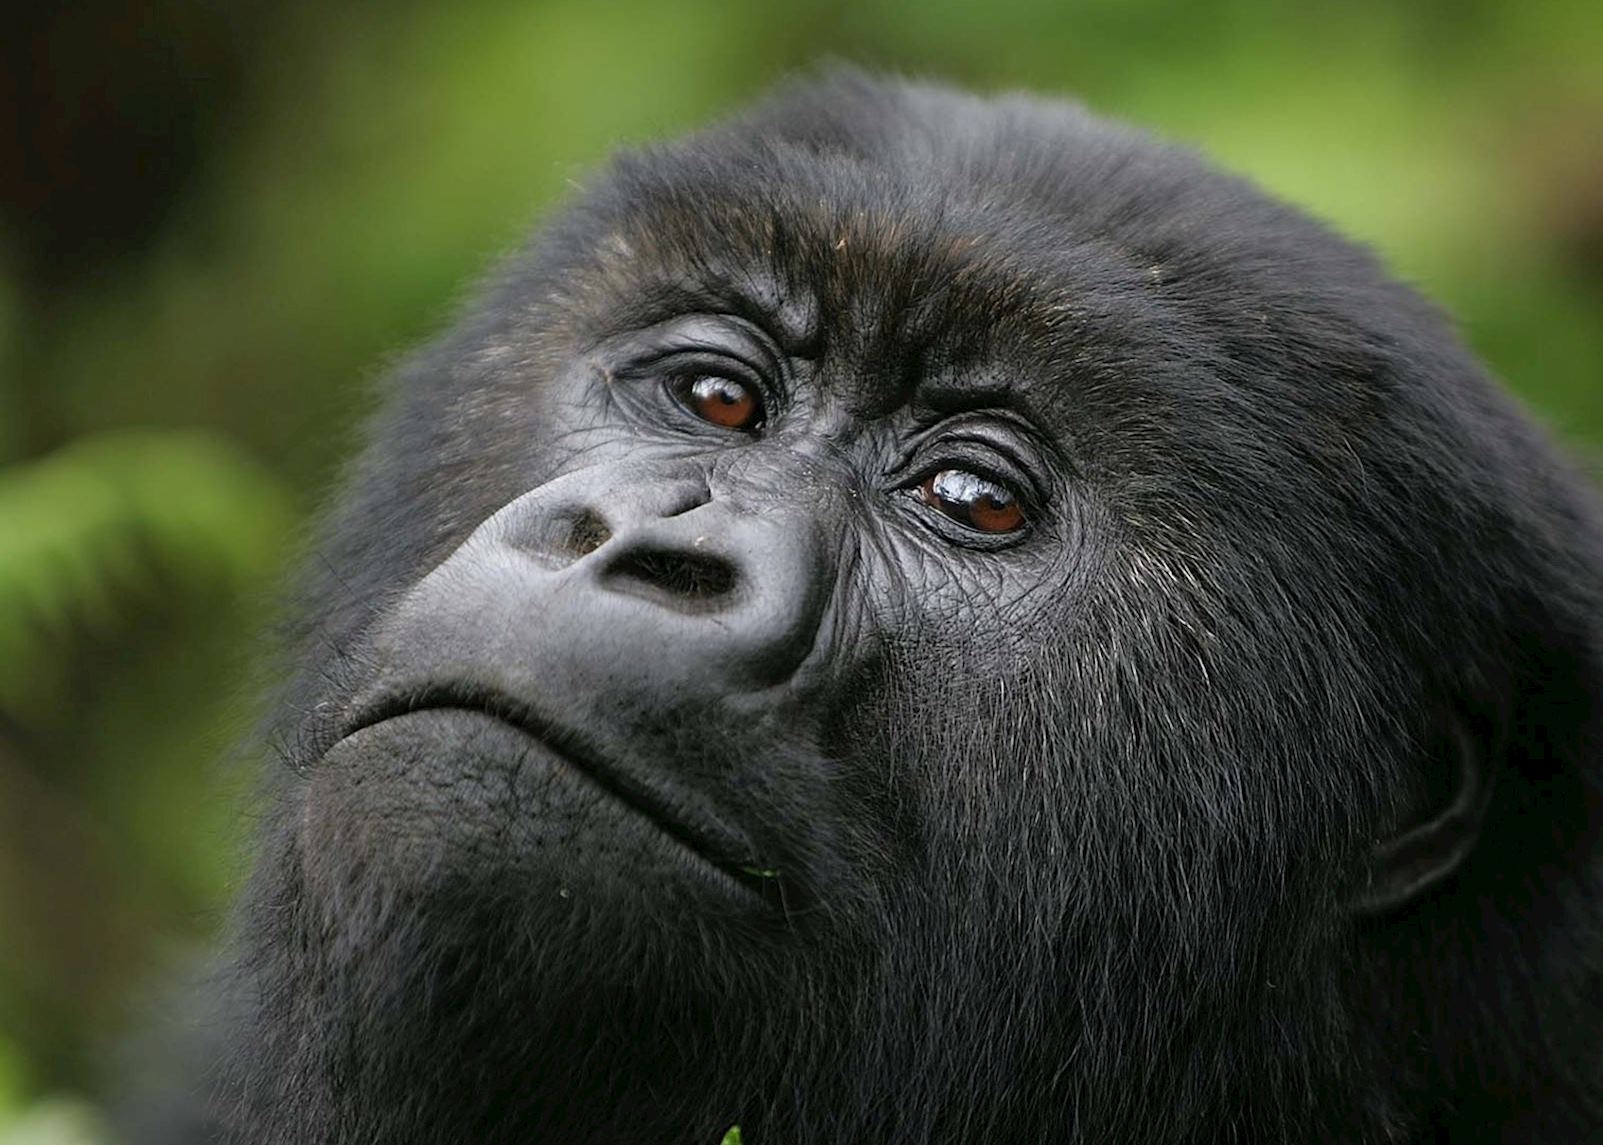 How to prepare for gorilla trekking in Rwanda